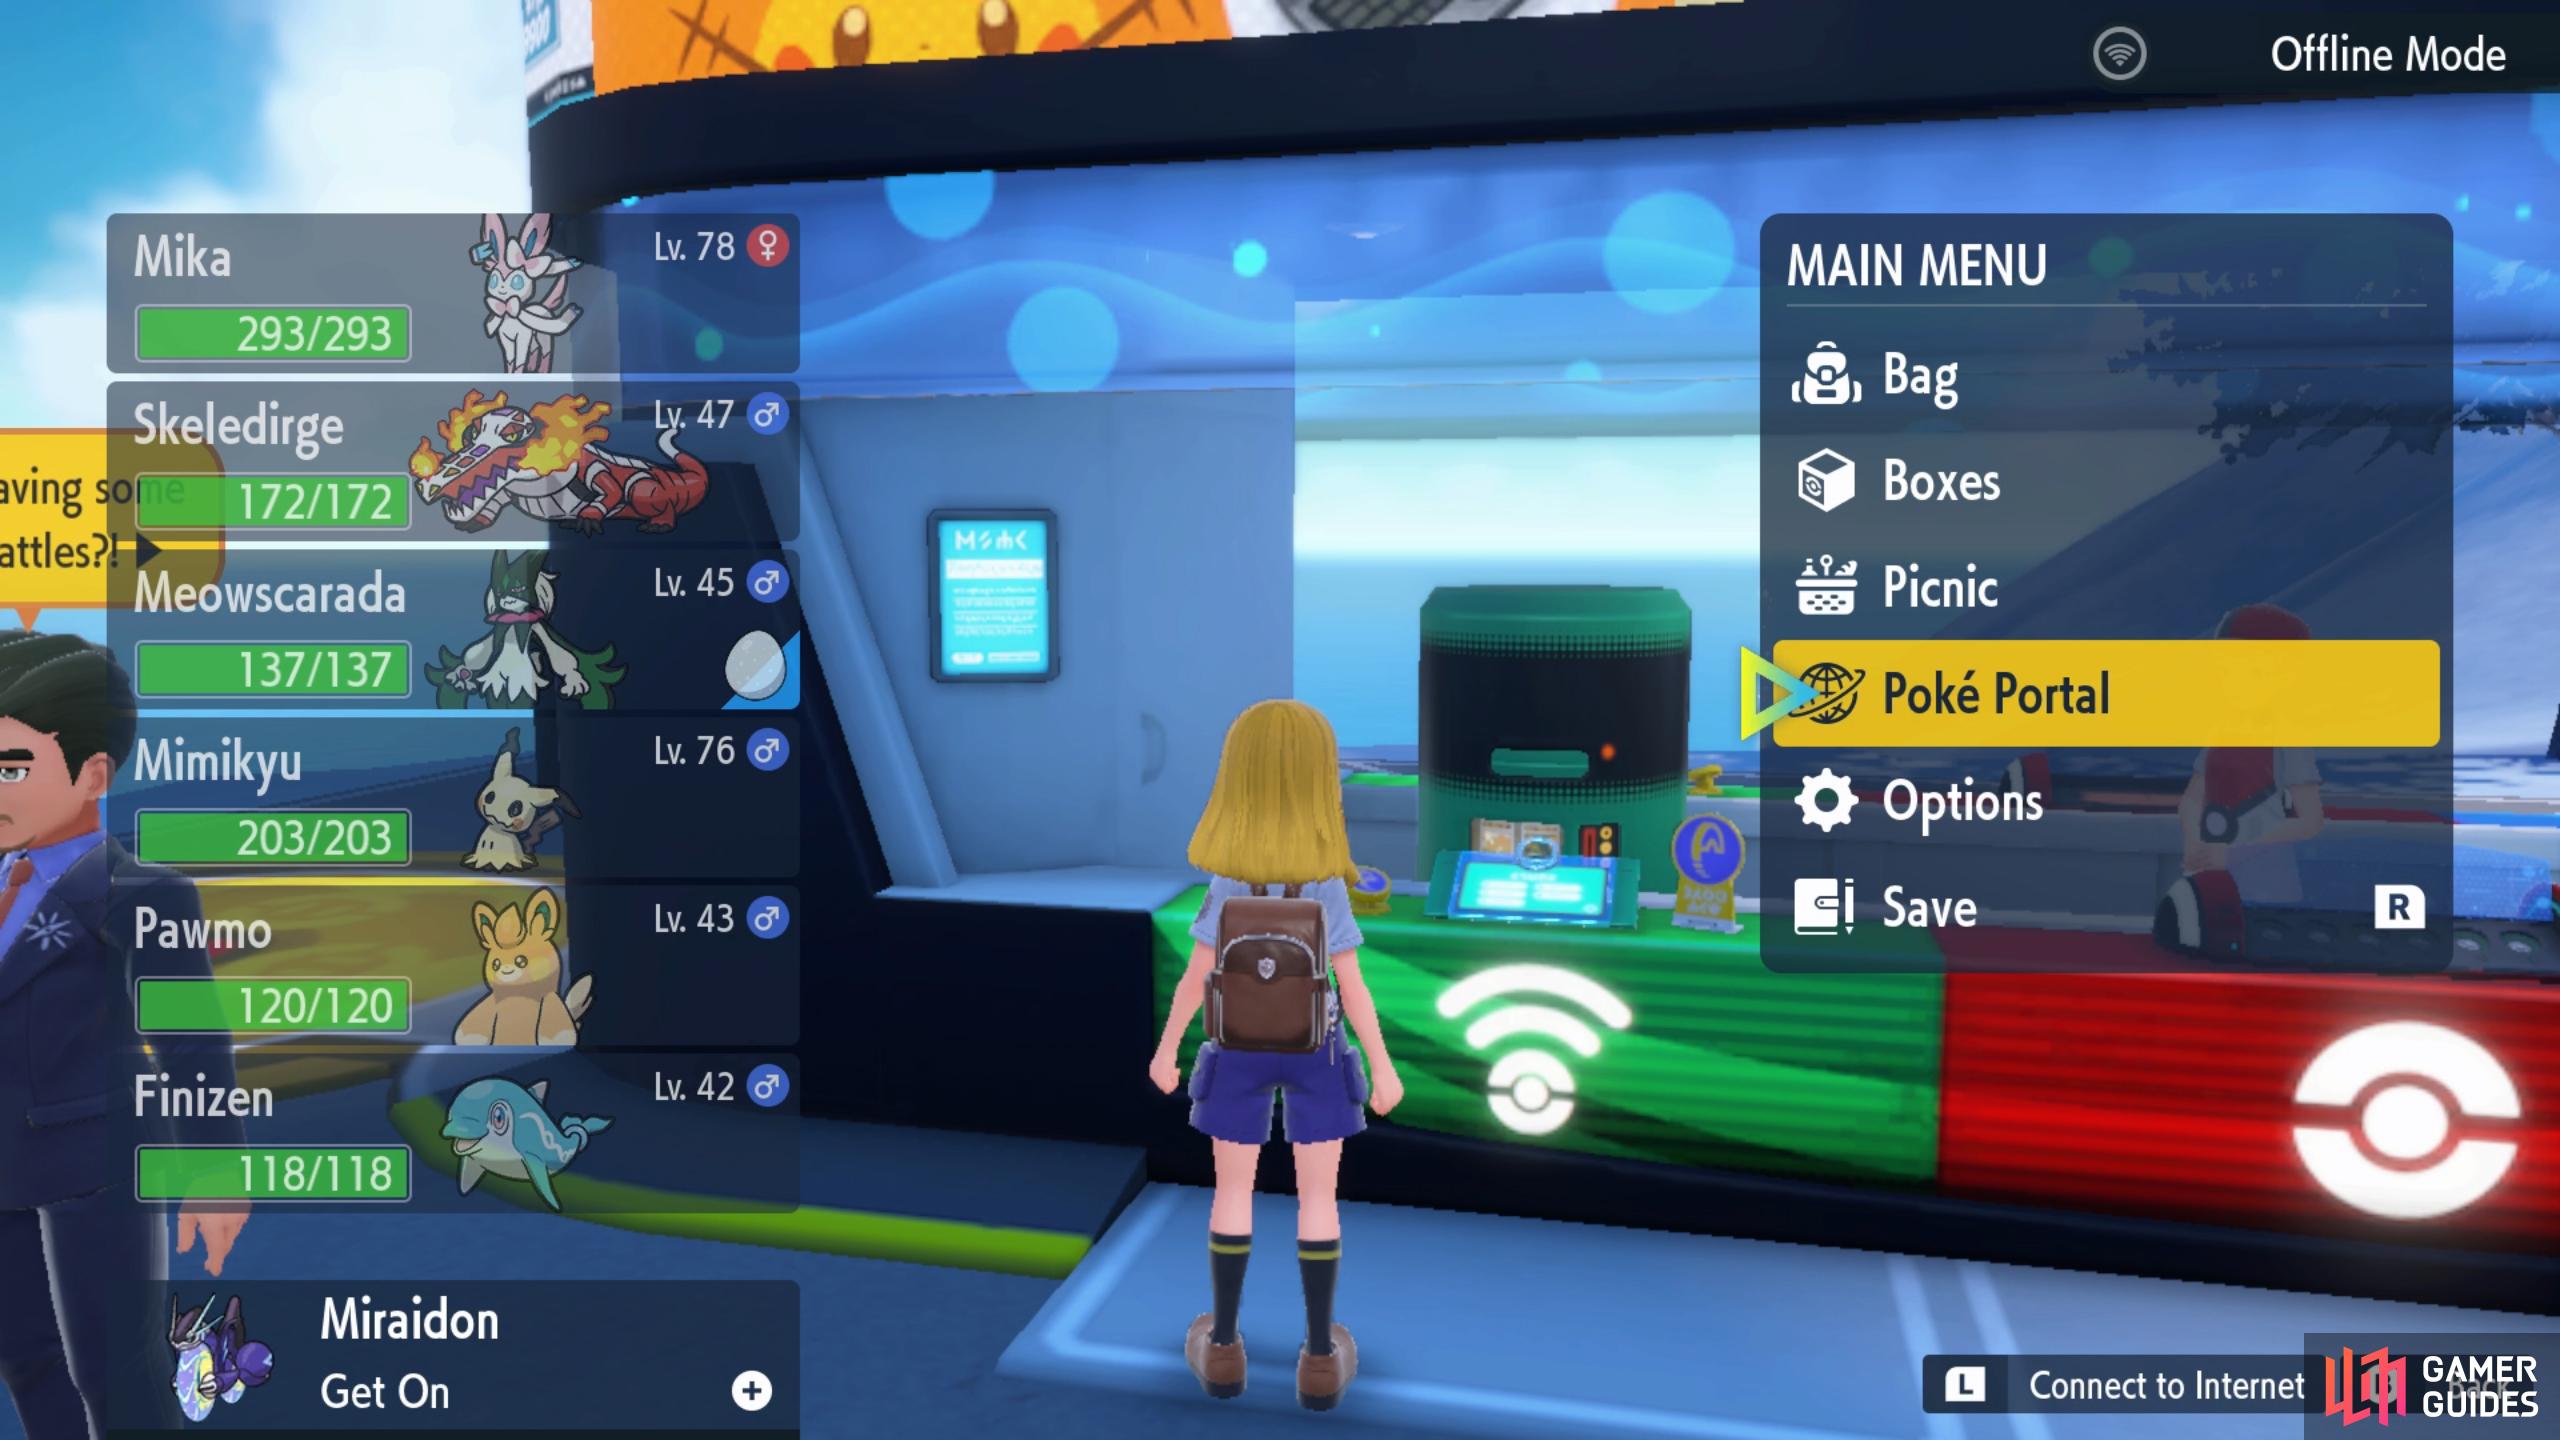 Open the main menu and select "Poké Portal".